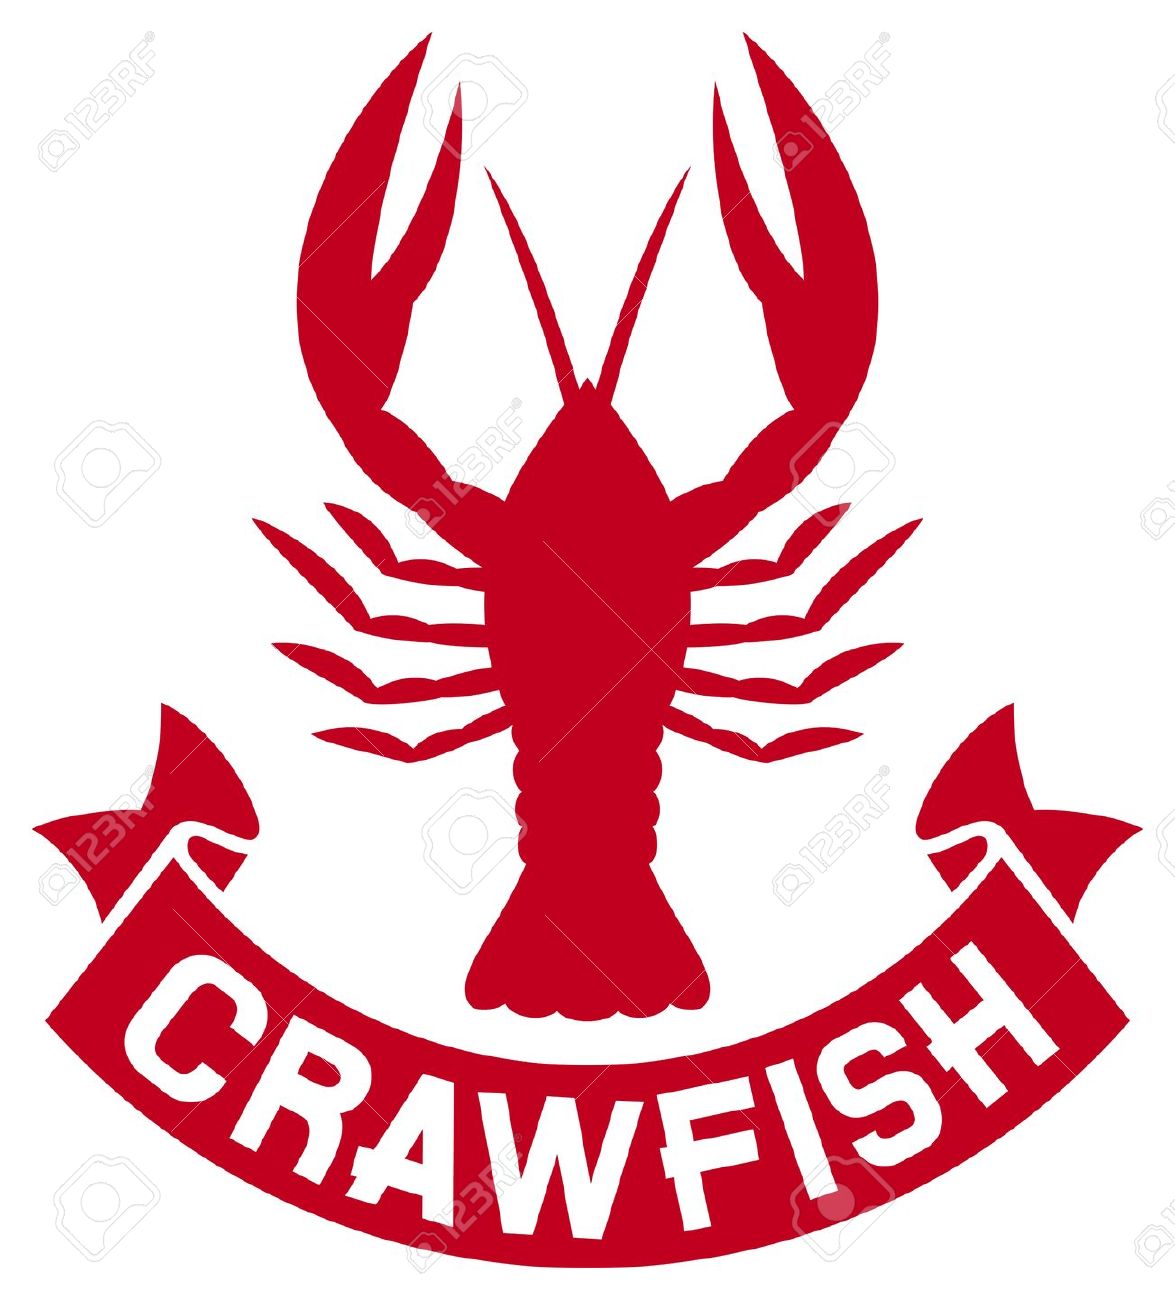 crawfish clipart - make into 